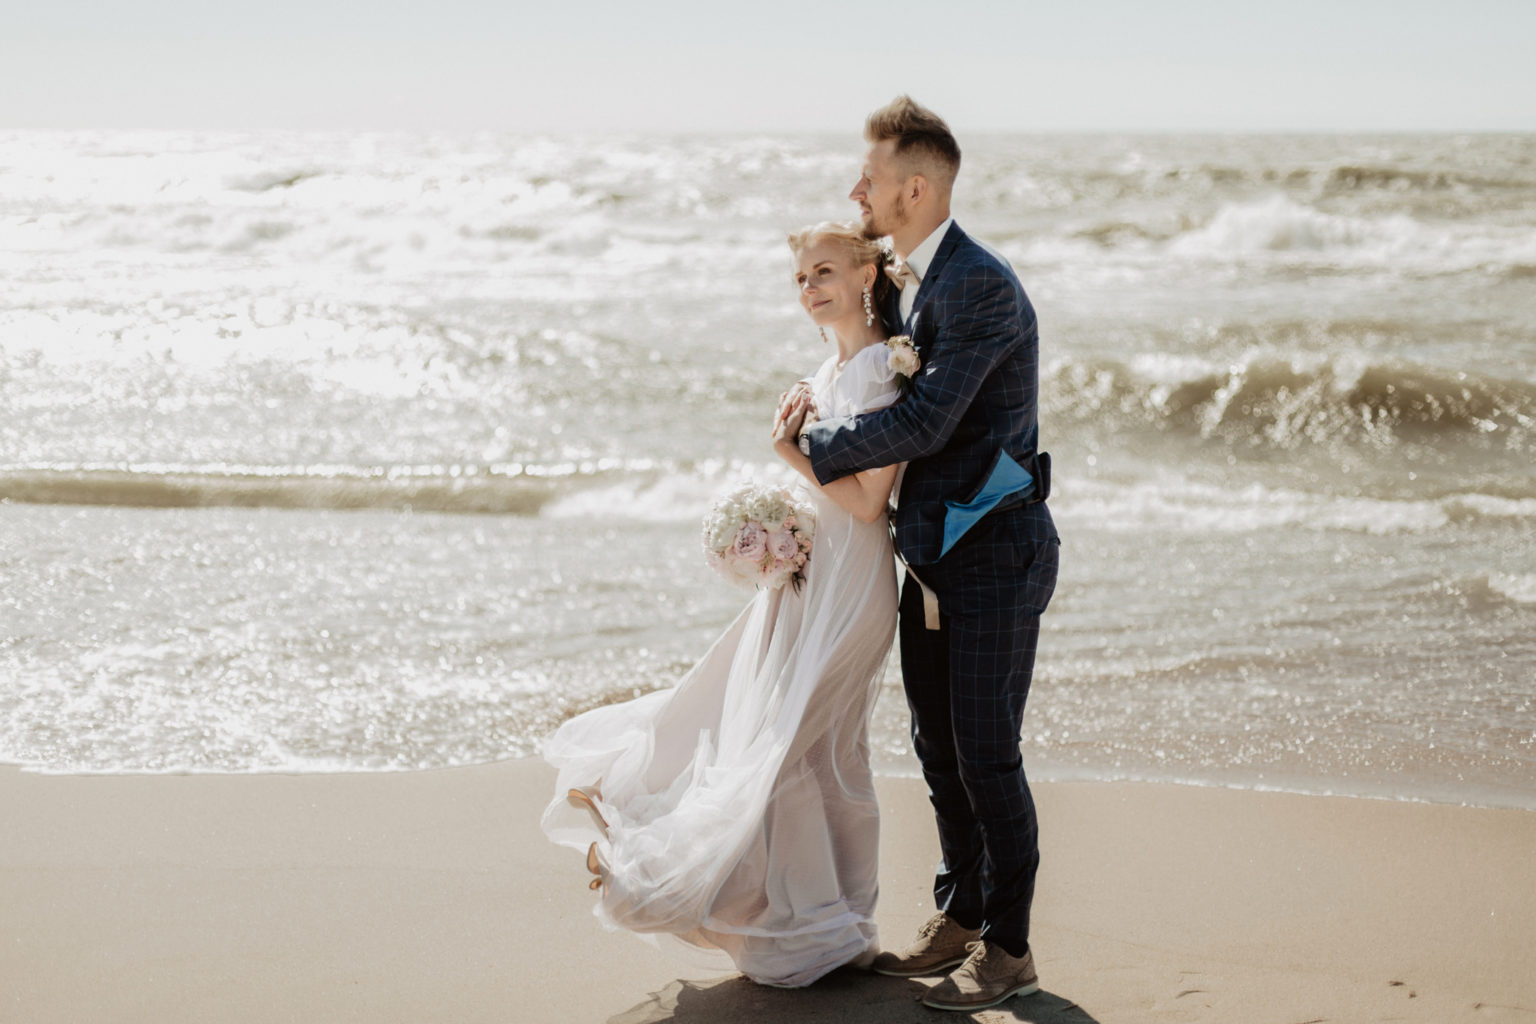 Amelii wedding dress design studio testimonials - Katrīna un Rolands